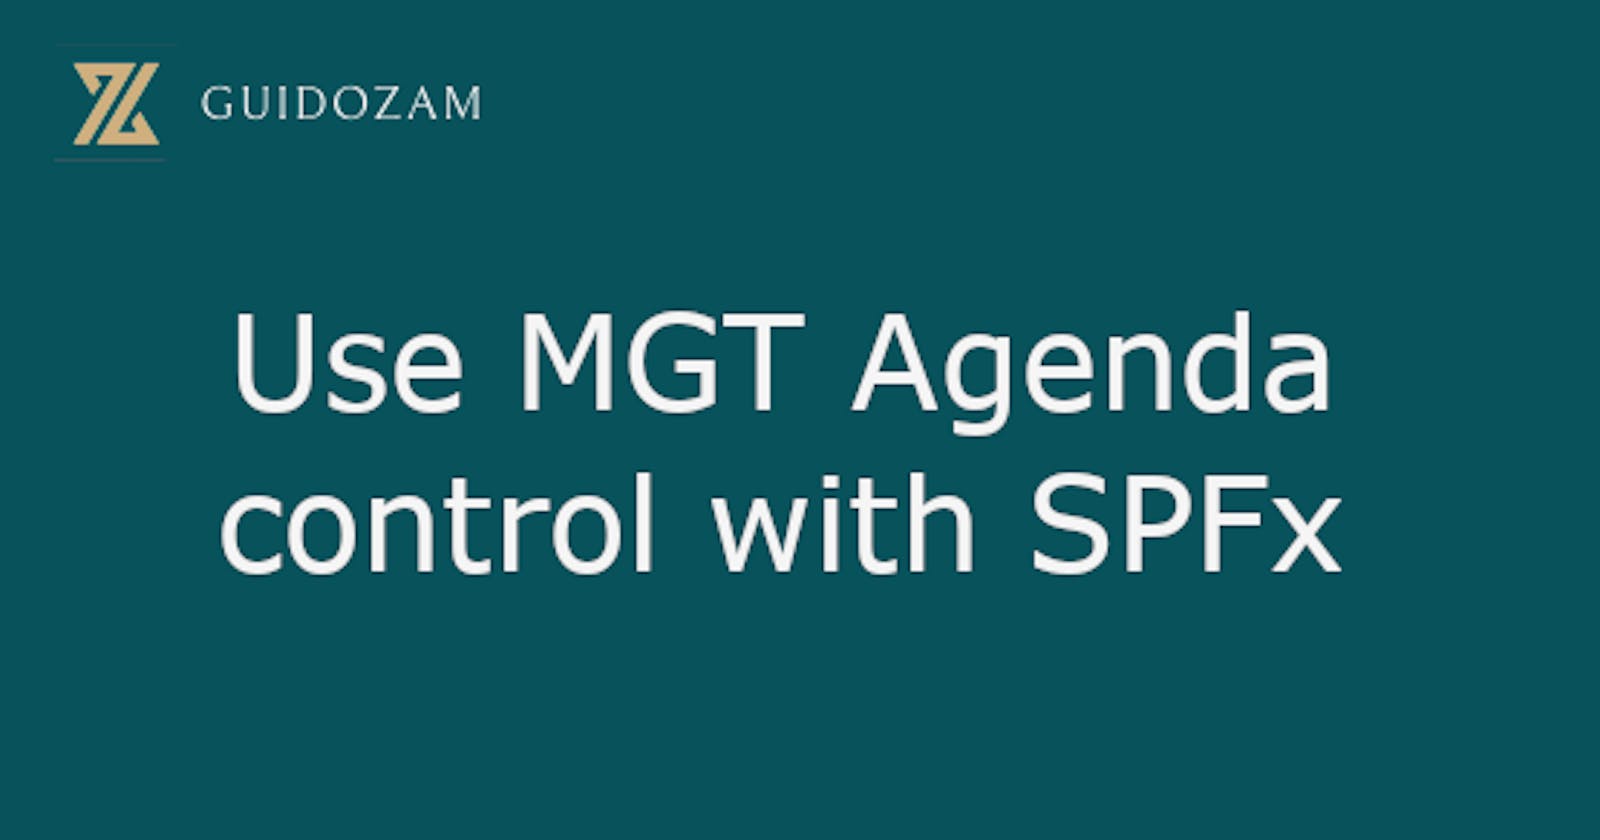 Use MGT Agenda control with SPFx